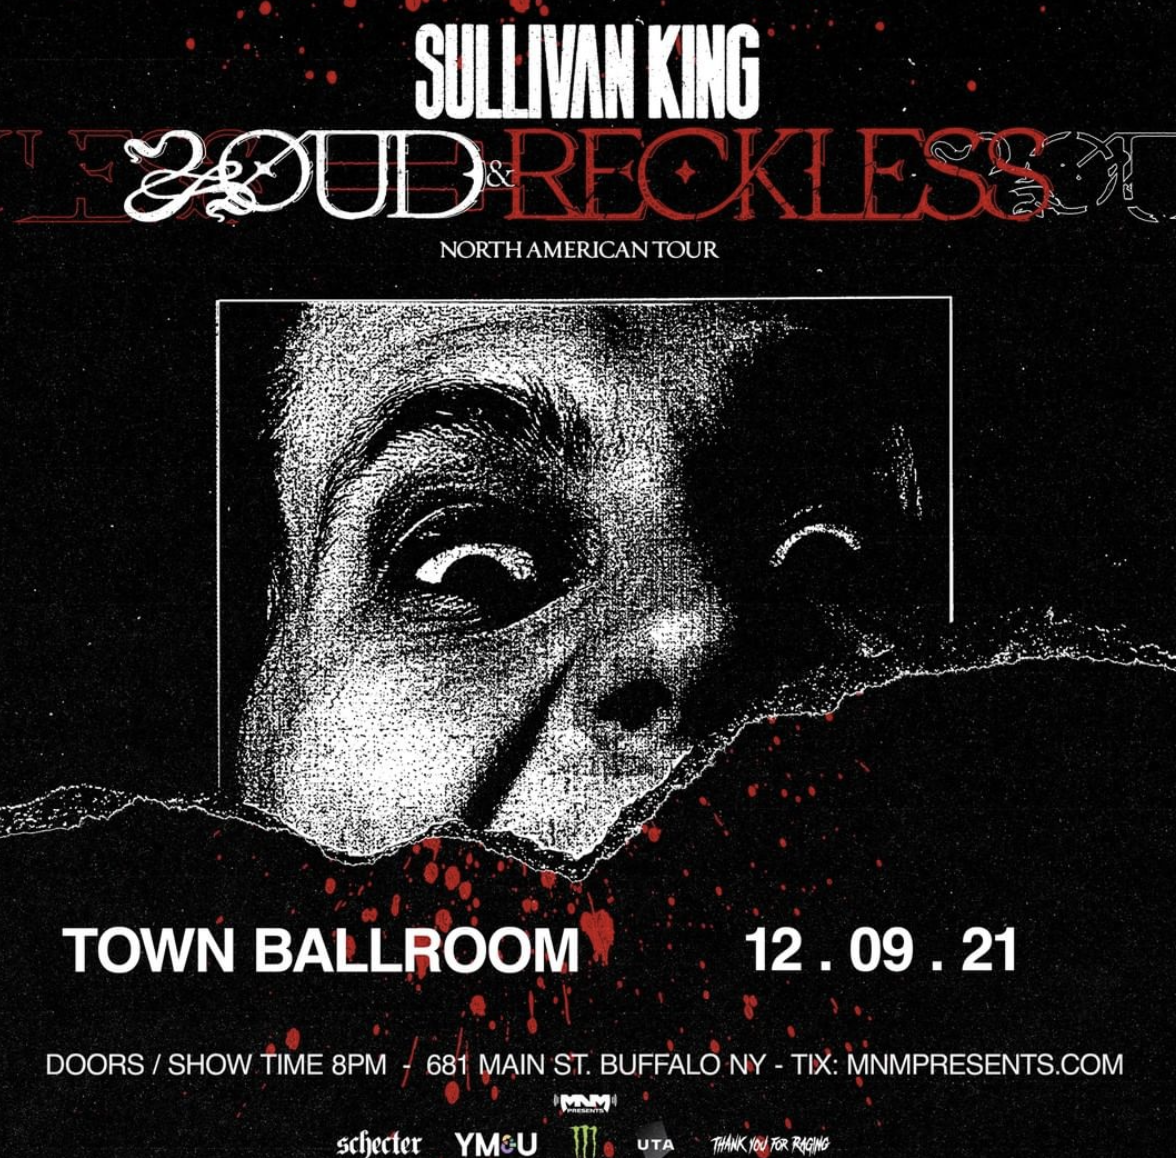 Sullivan King - Loud & Reckless Tour at Town Ballroom - Buffalo Place